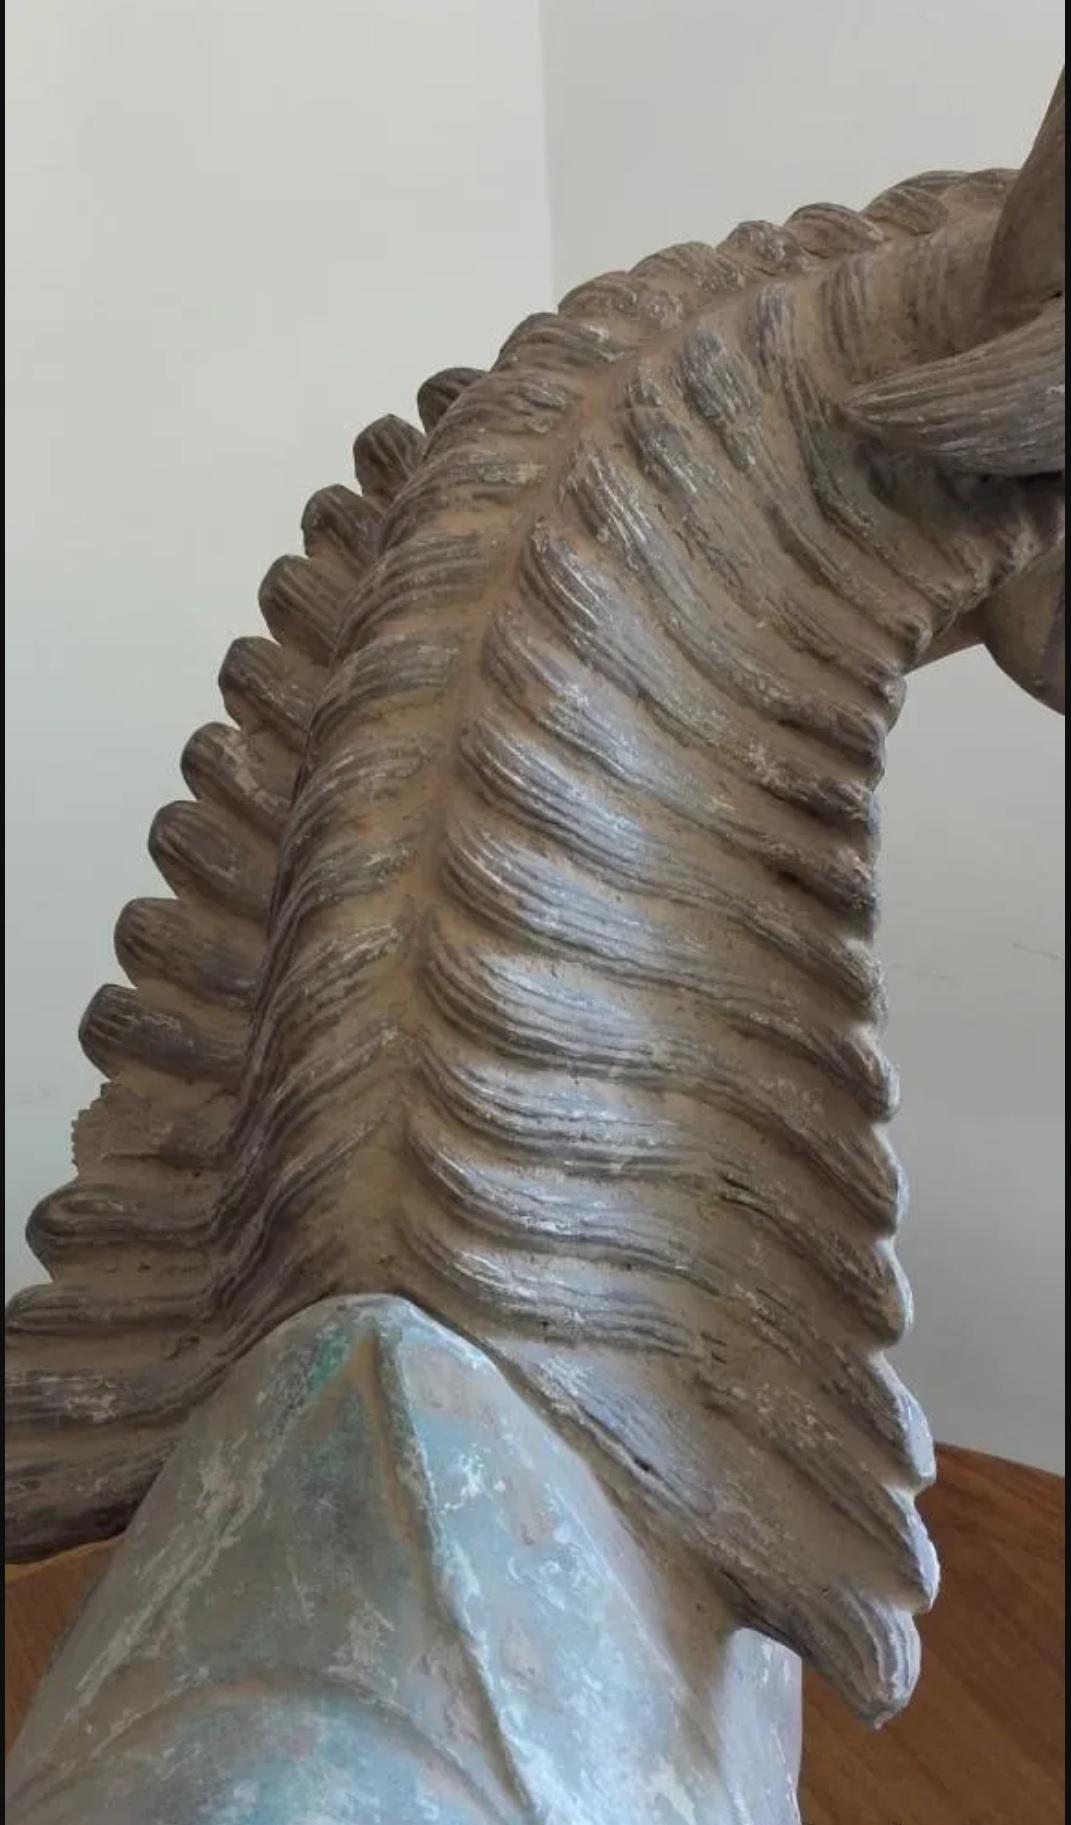 Han Dynasty Terracotta Horse, China, '206 BC–220 AD' 3